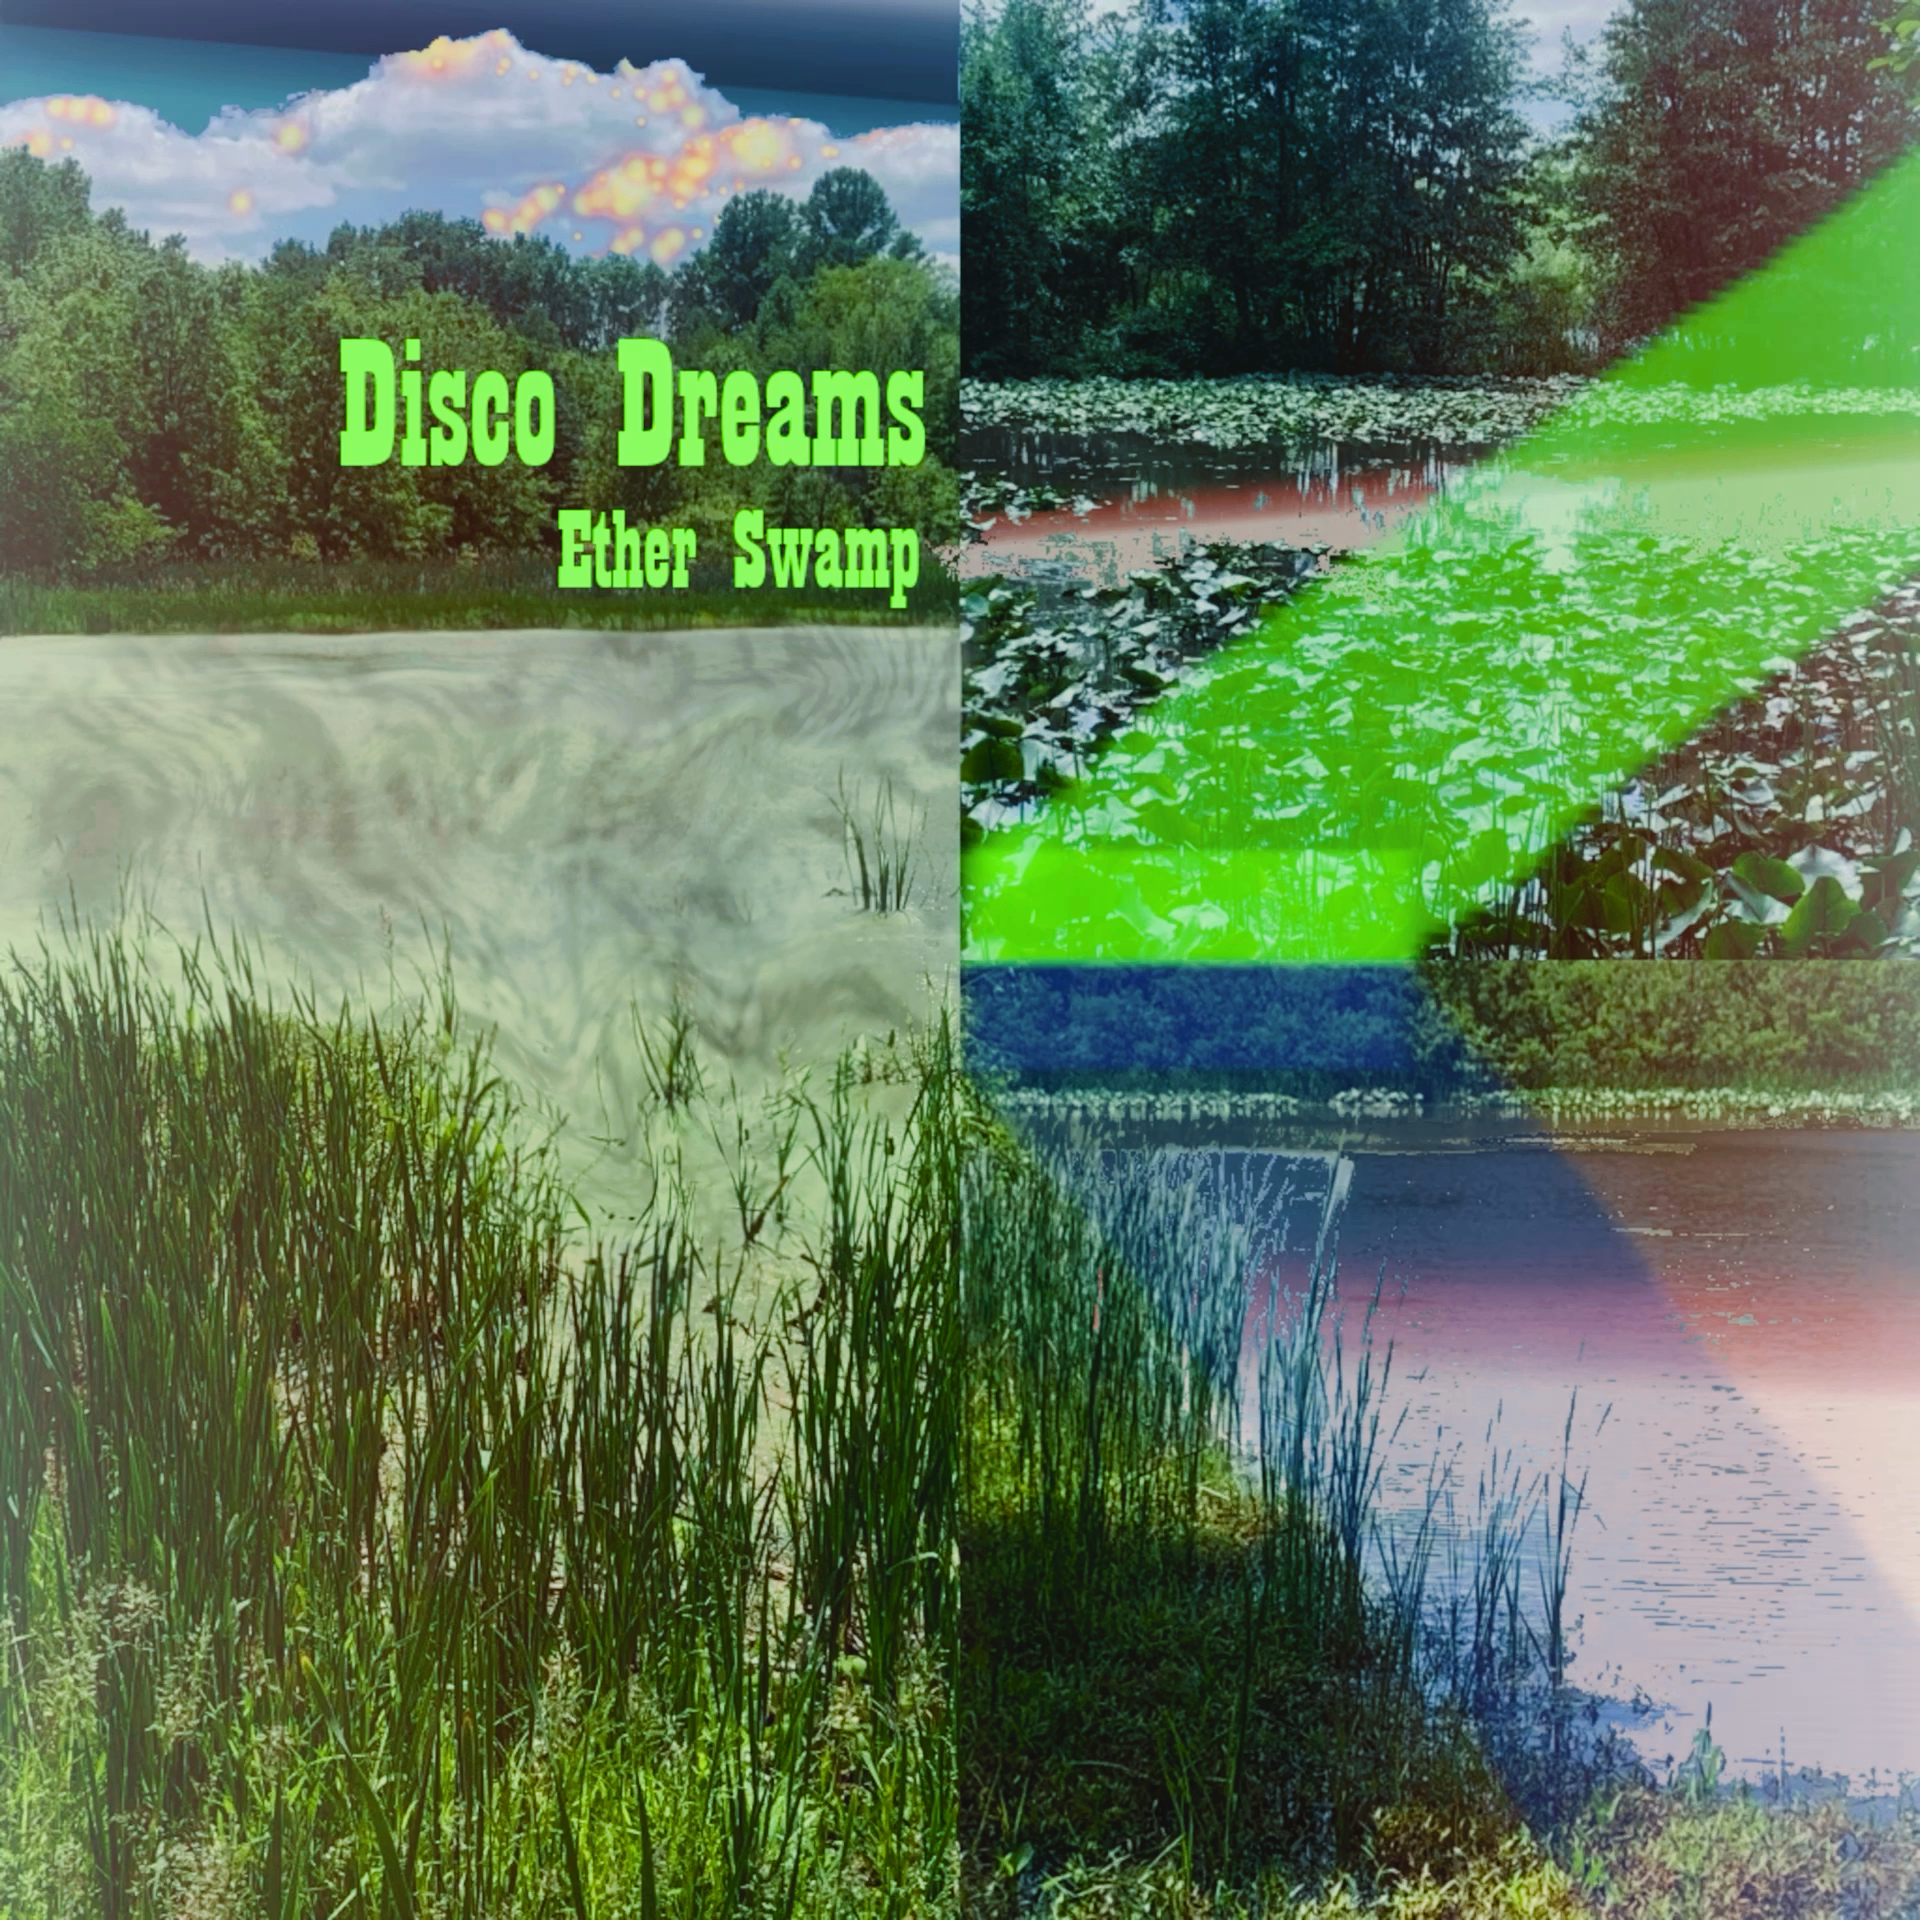 Disco Dreams “Ether Swamp”